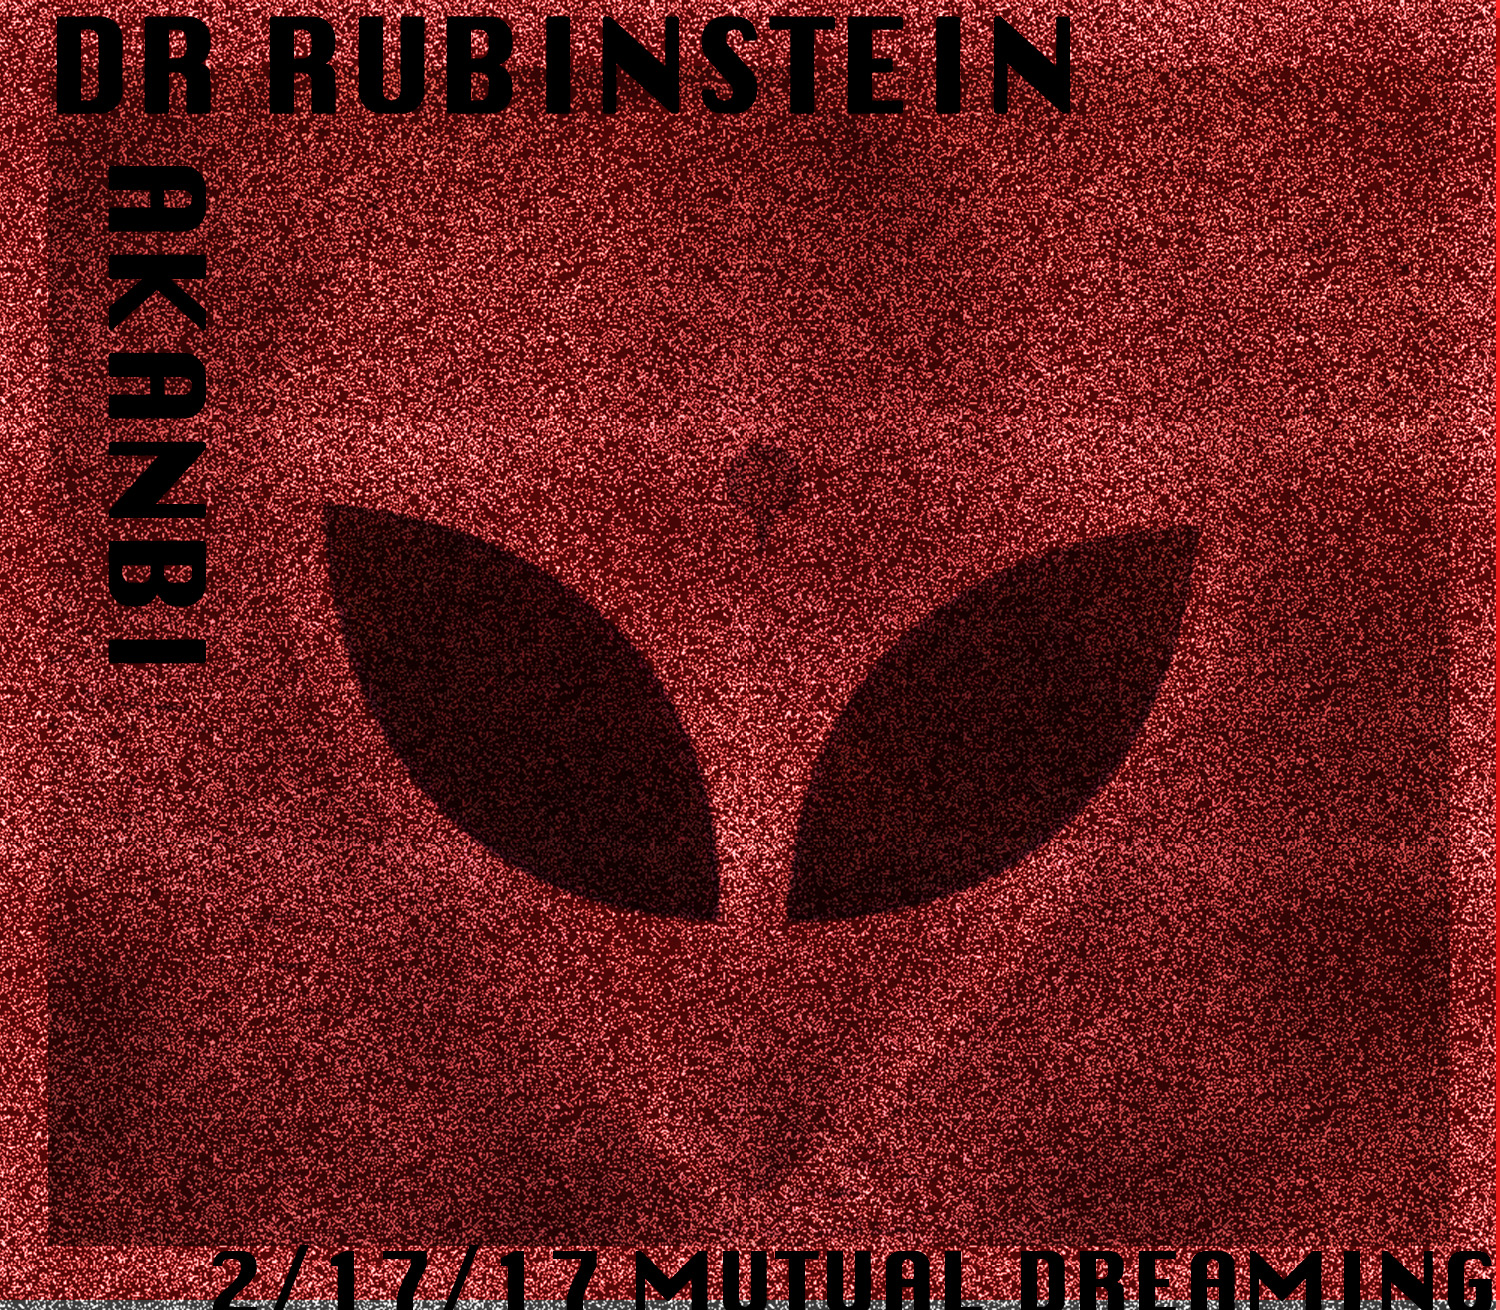    Mutual Dreaming presents Dr. Rubinstein (four hour set), Akanbi   February 2017 